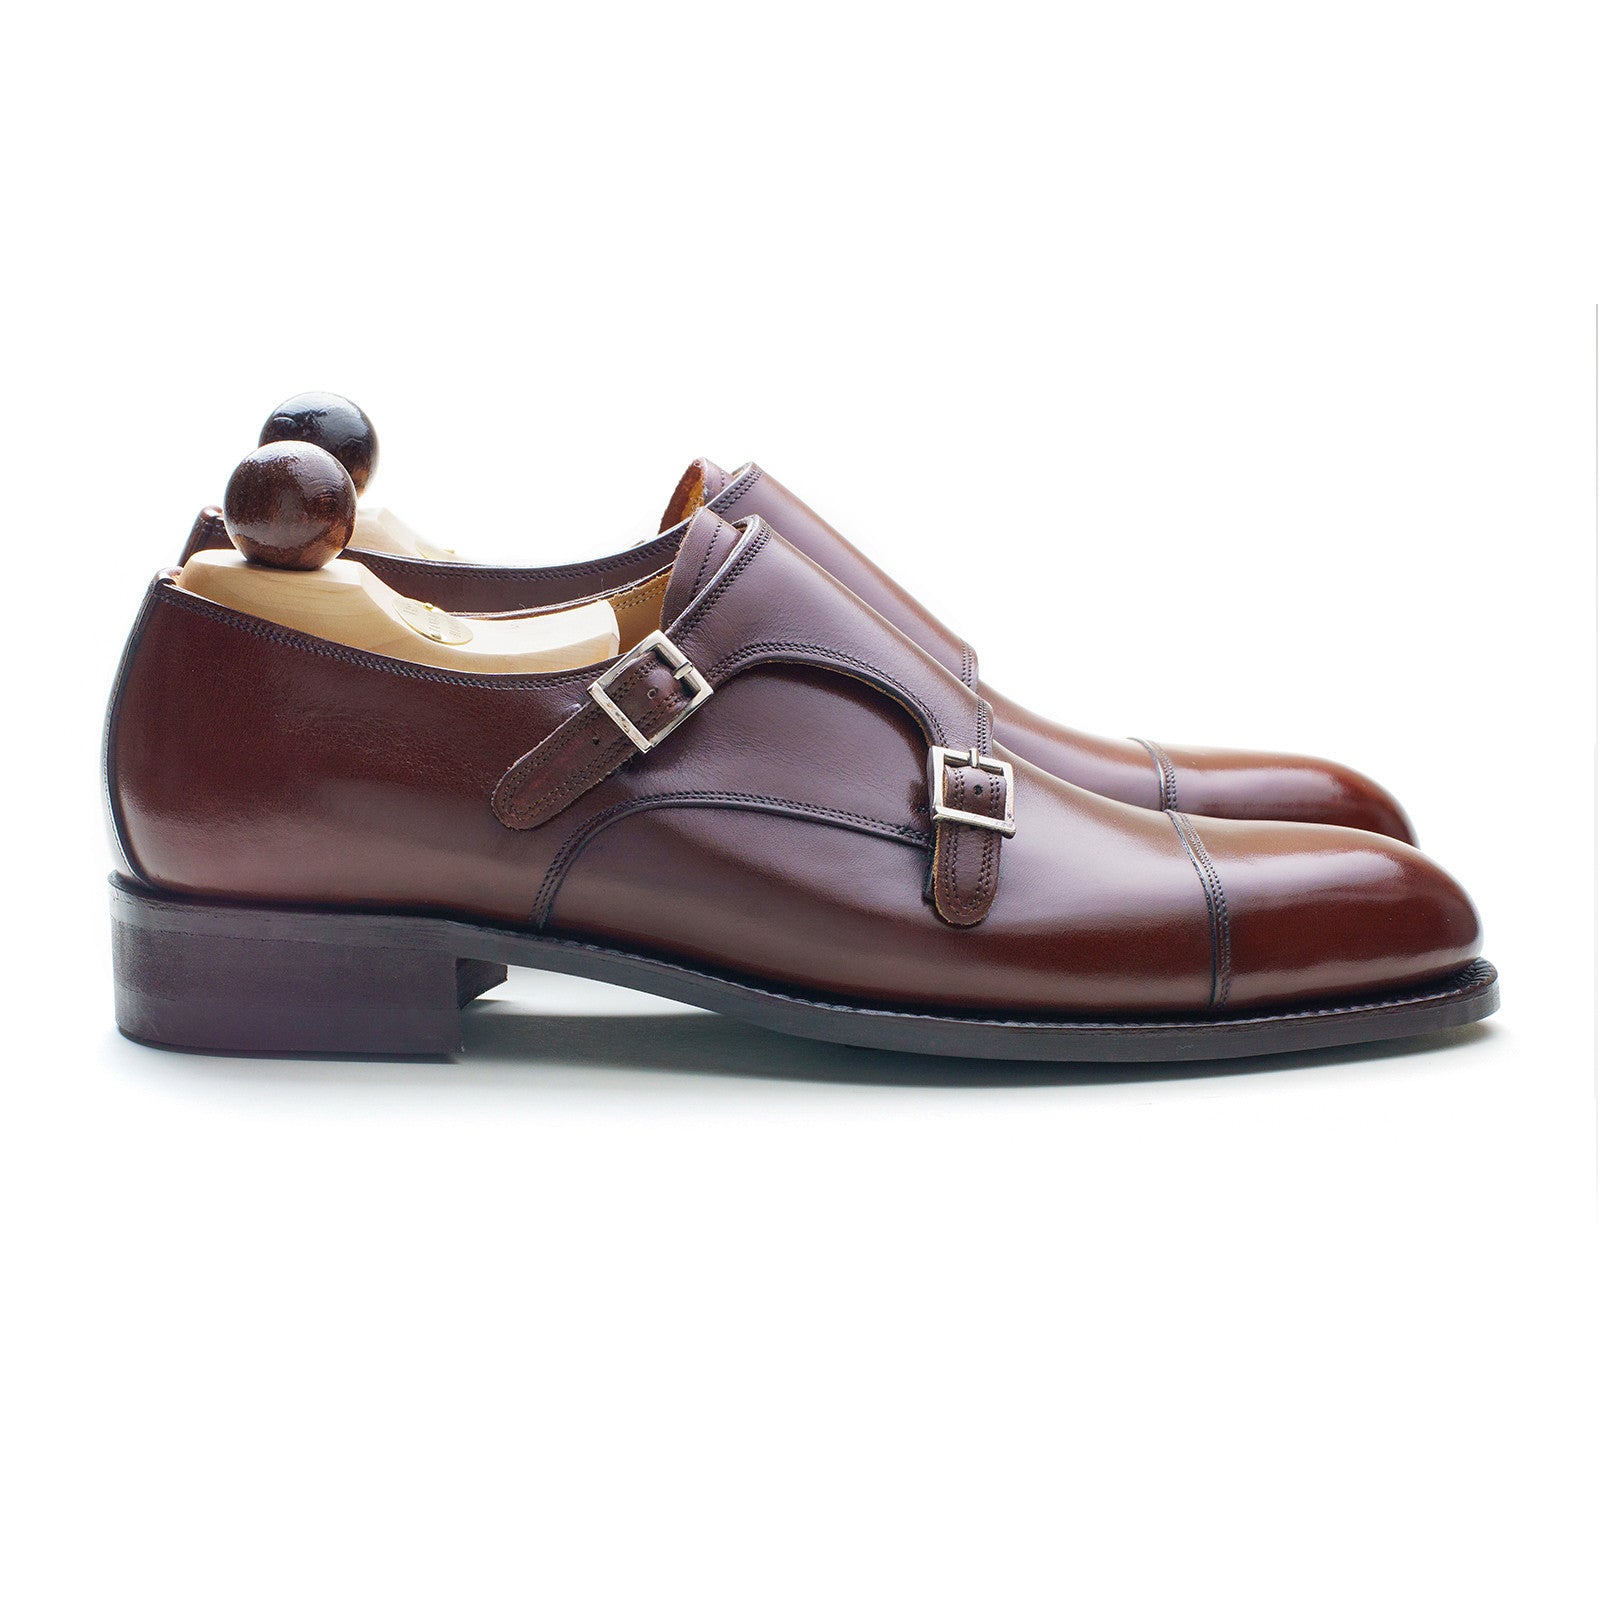 Vass Shoes Style 1064 Monk Dark Cognac Calf - Side View